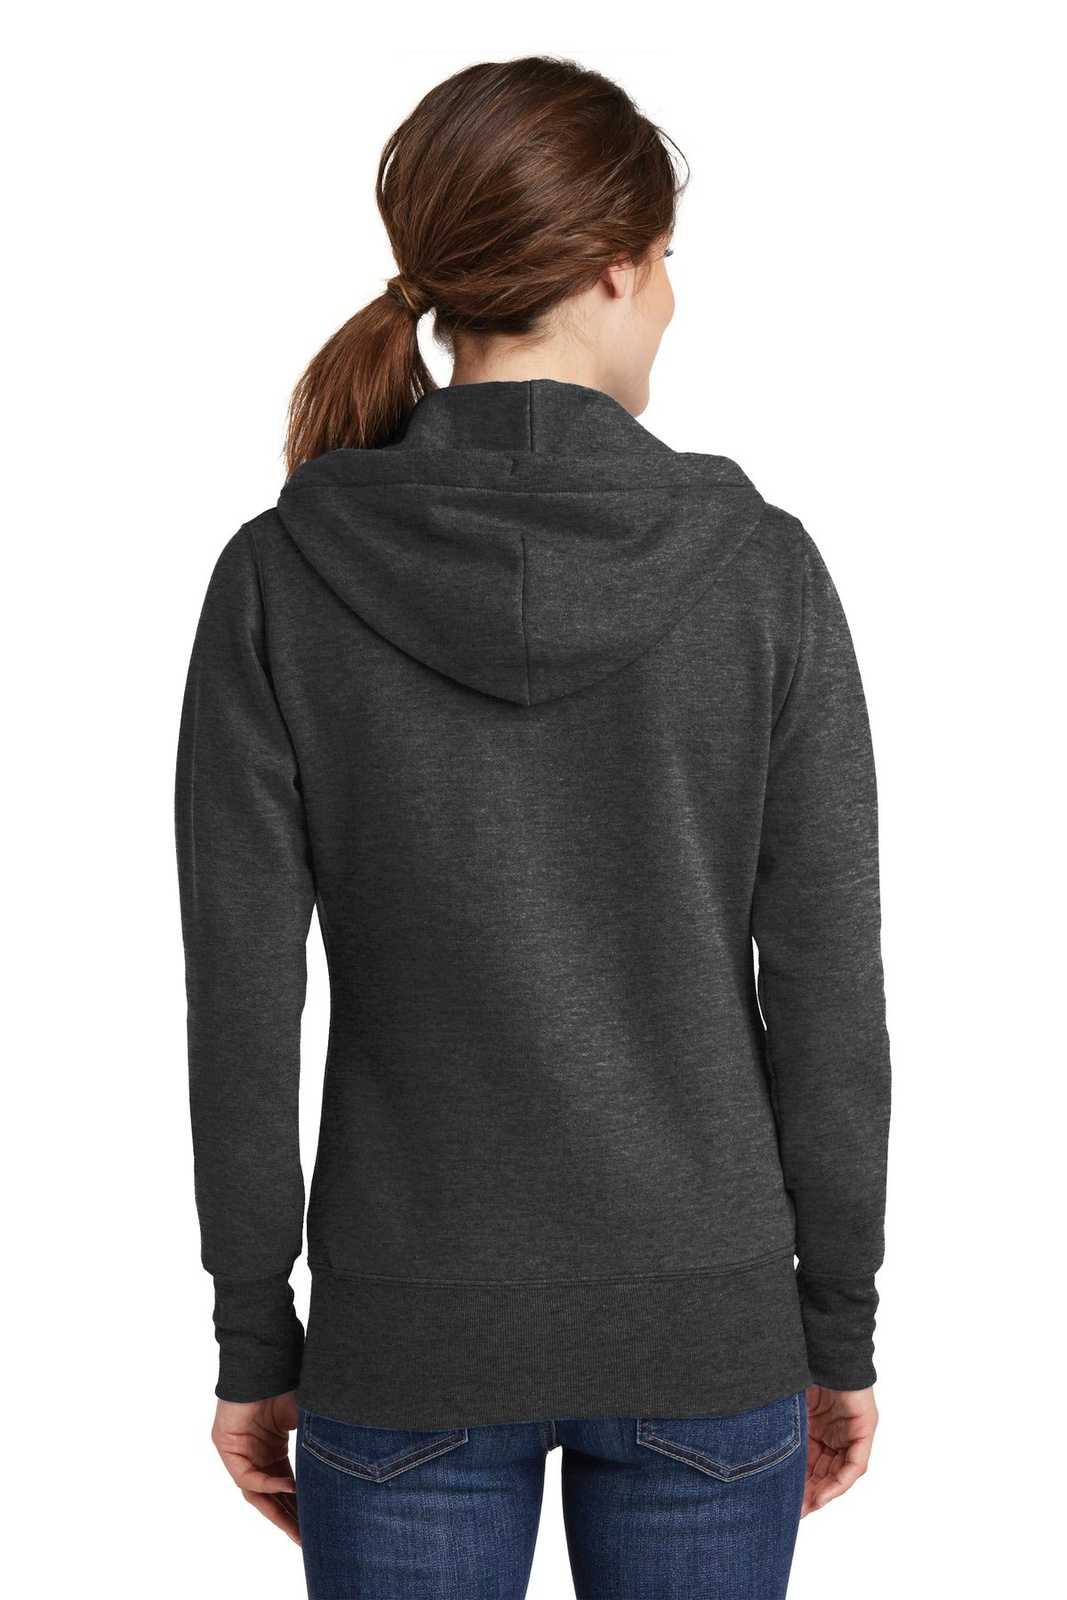 Port &amp; Company LPC78ZH Ladies Core Fleece Full-Zip Hooded Sweatshirt - Dark Heather Gray - HIT a Double - 2